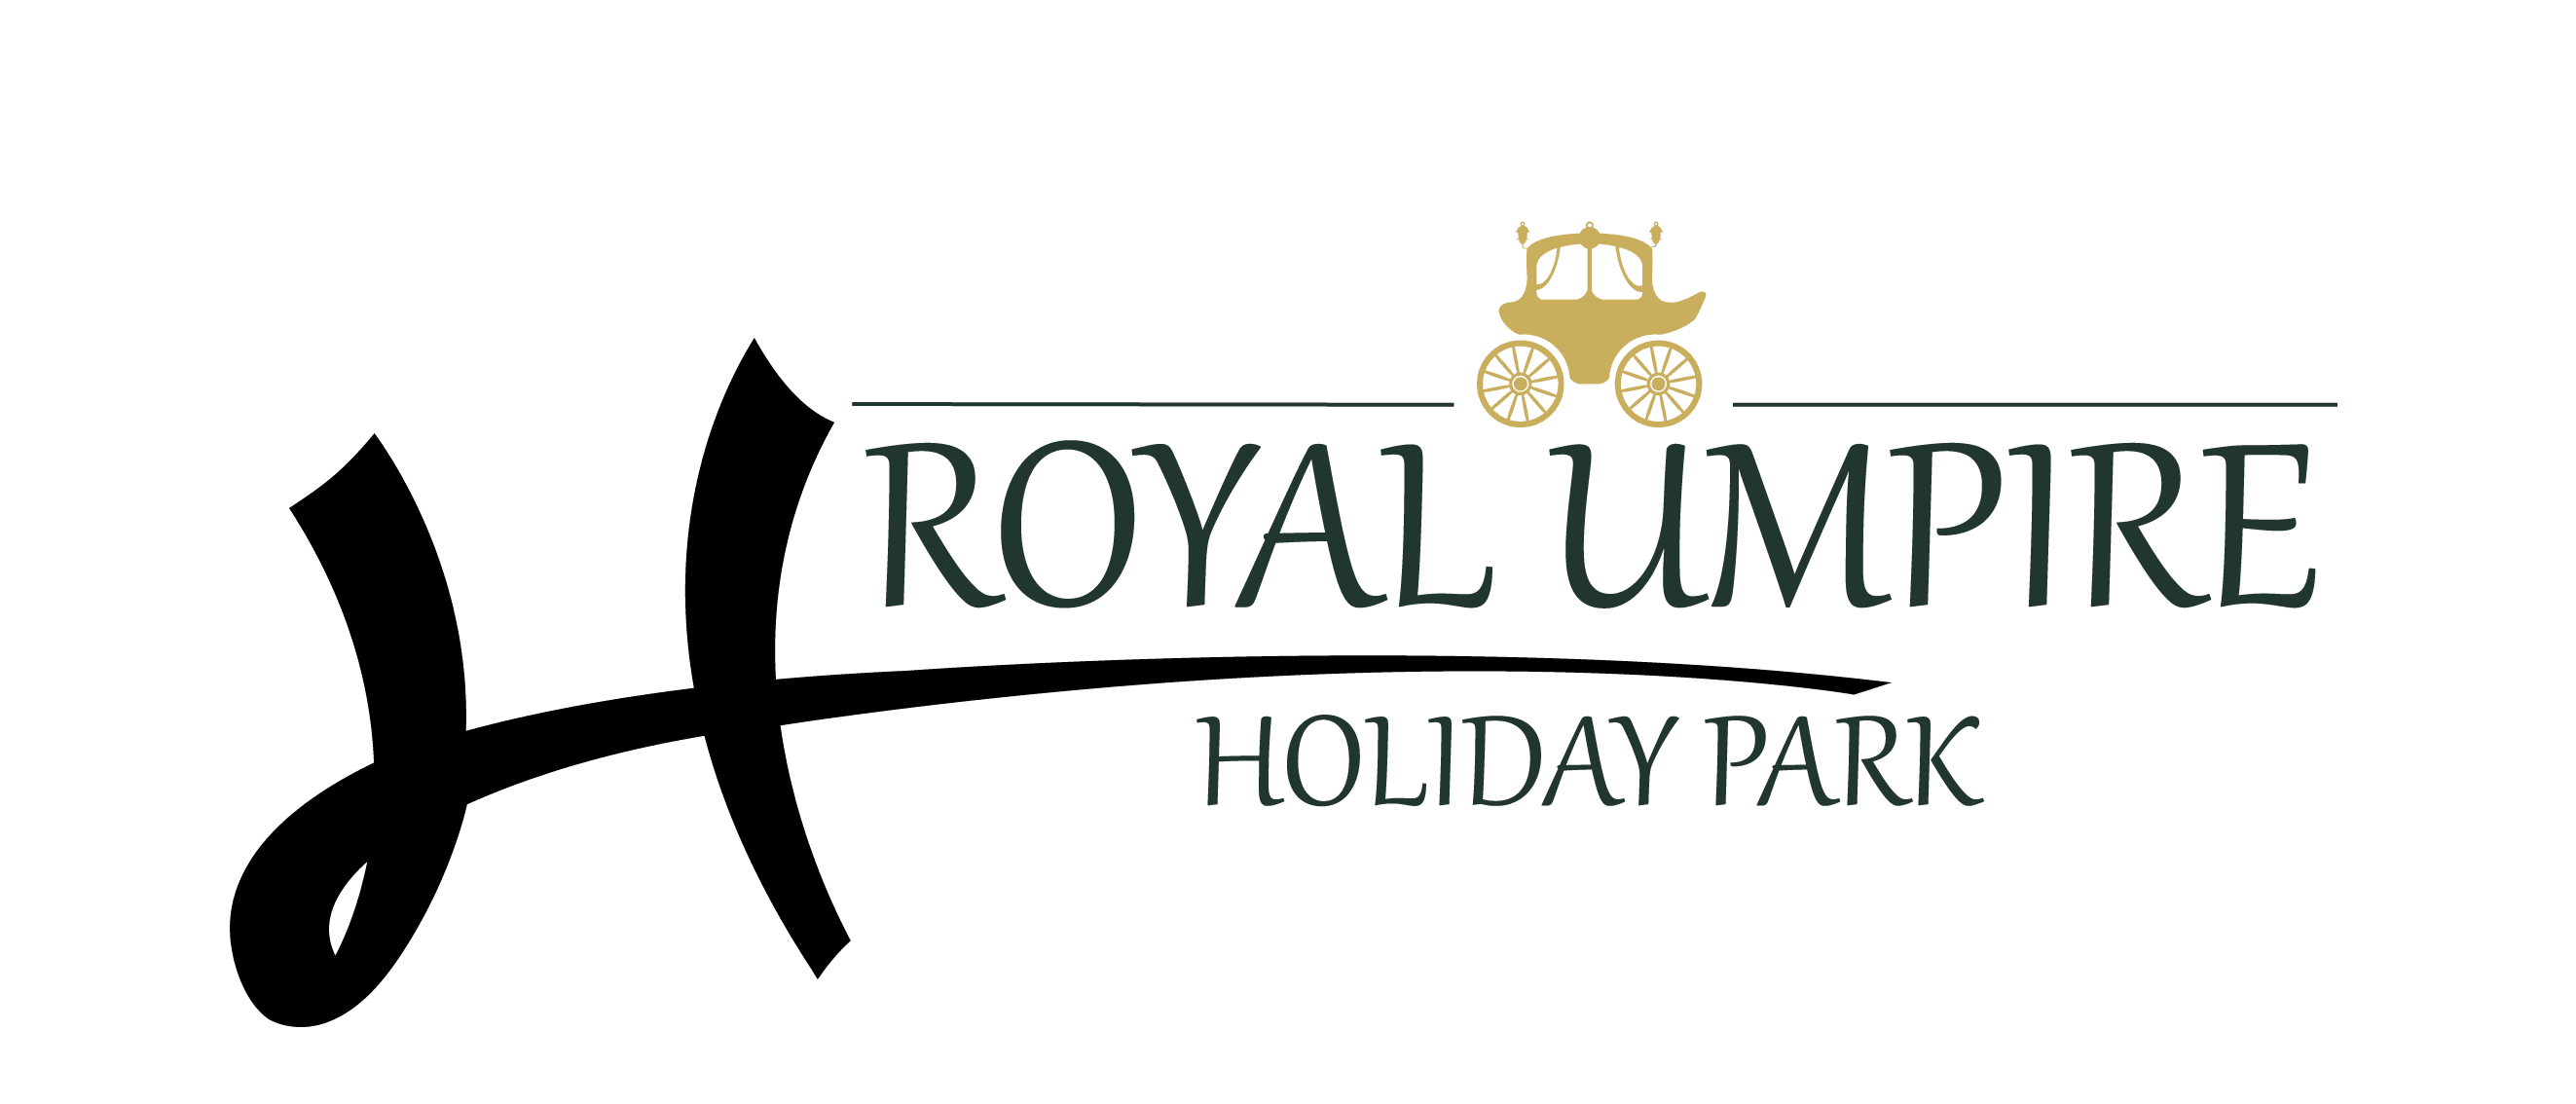 Royal Umpire Holiday Park